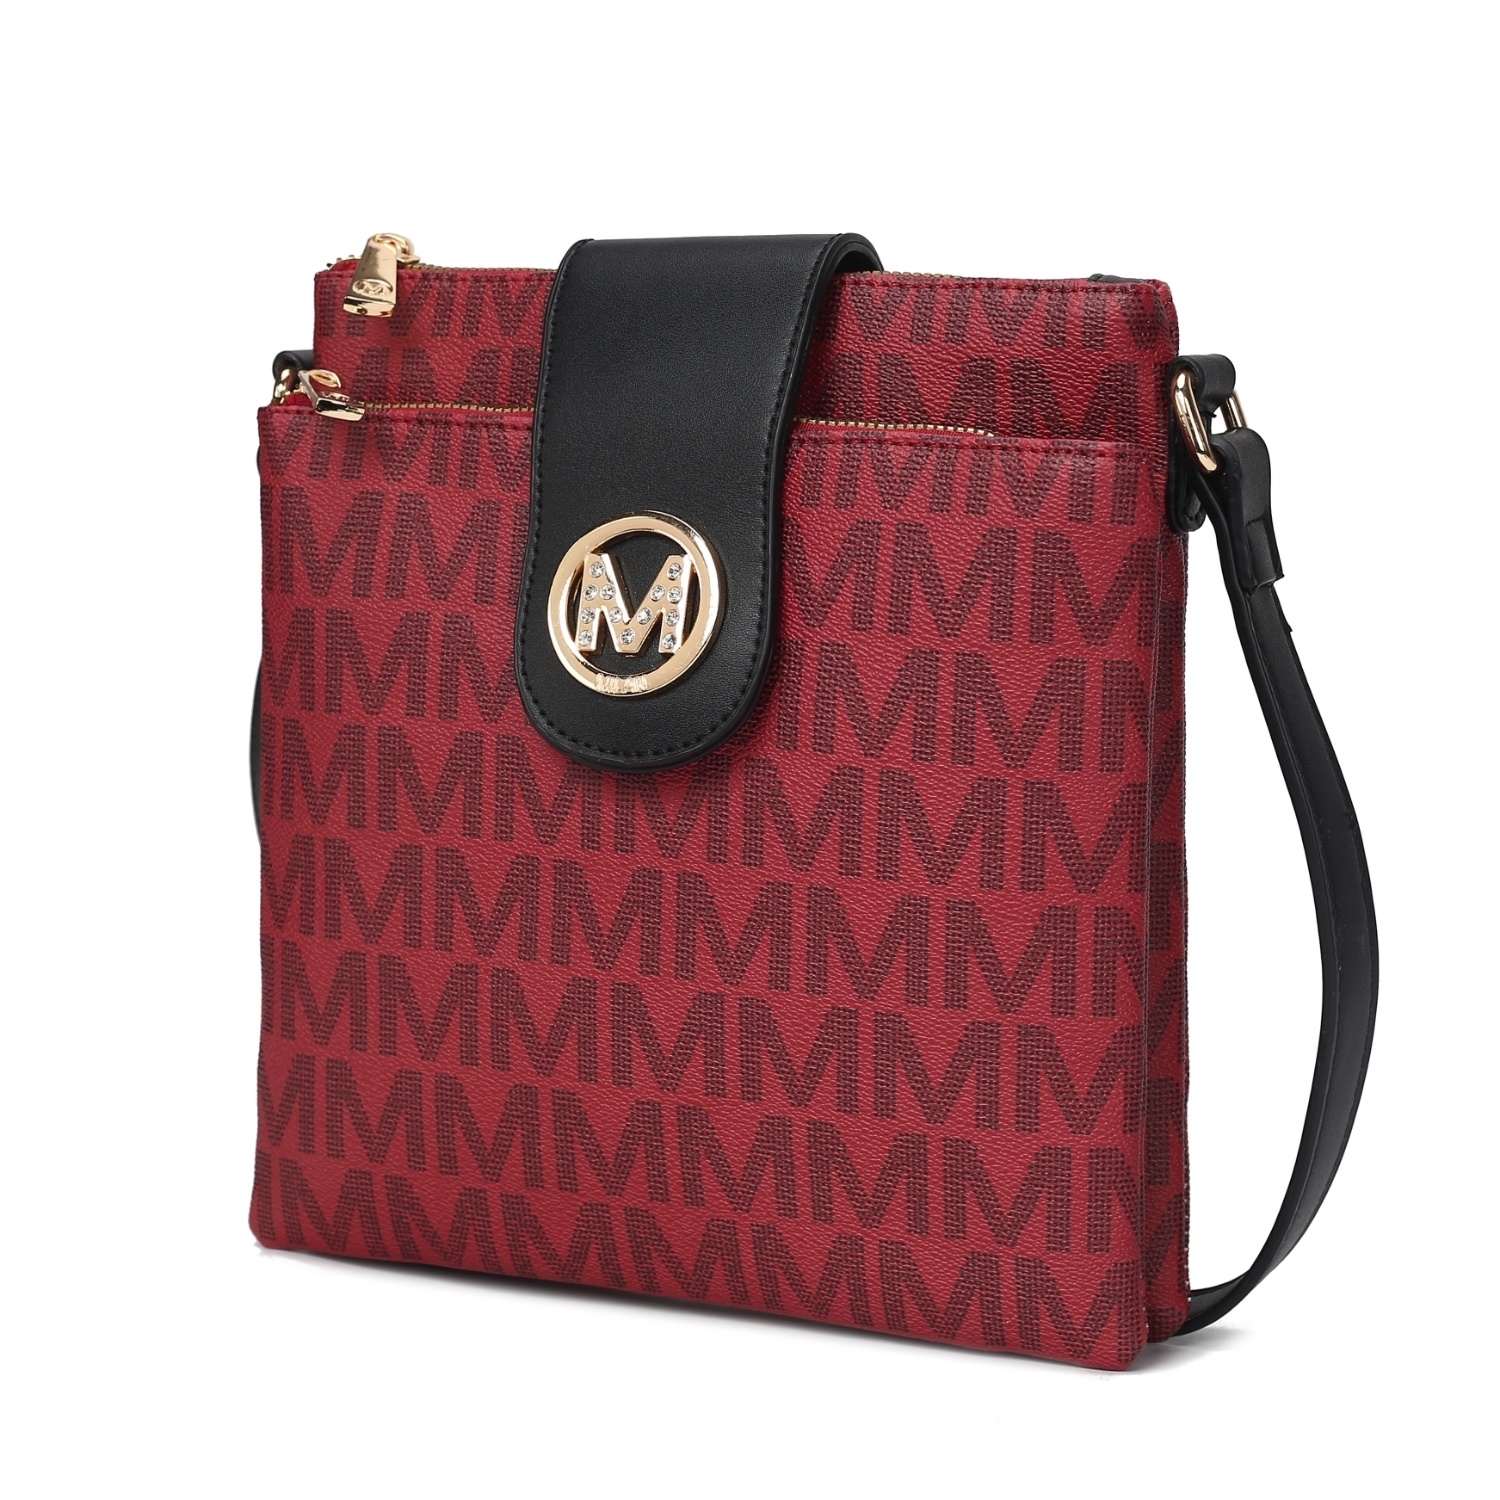 MKF Collection Wrigley M Signature Crossbody Handbag By Mia K. - Burgundy